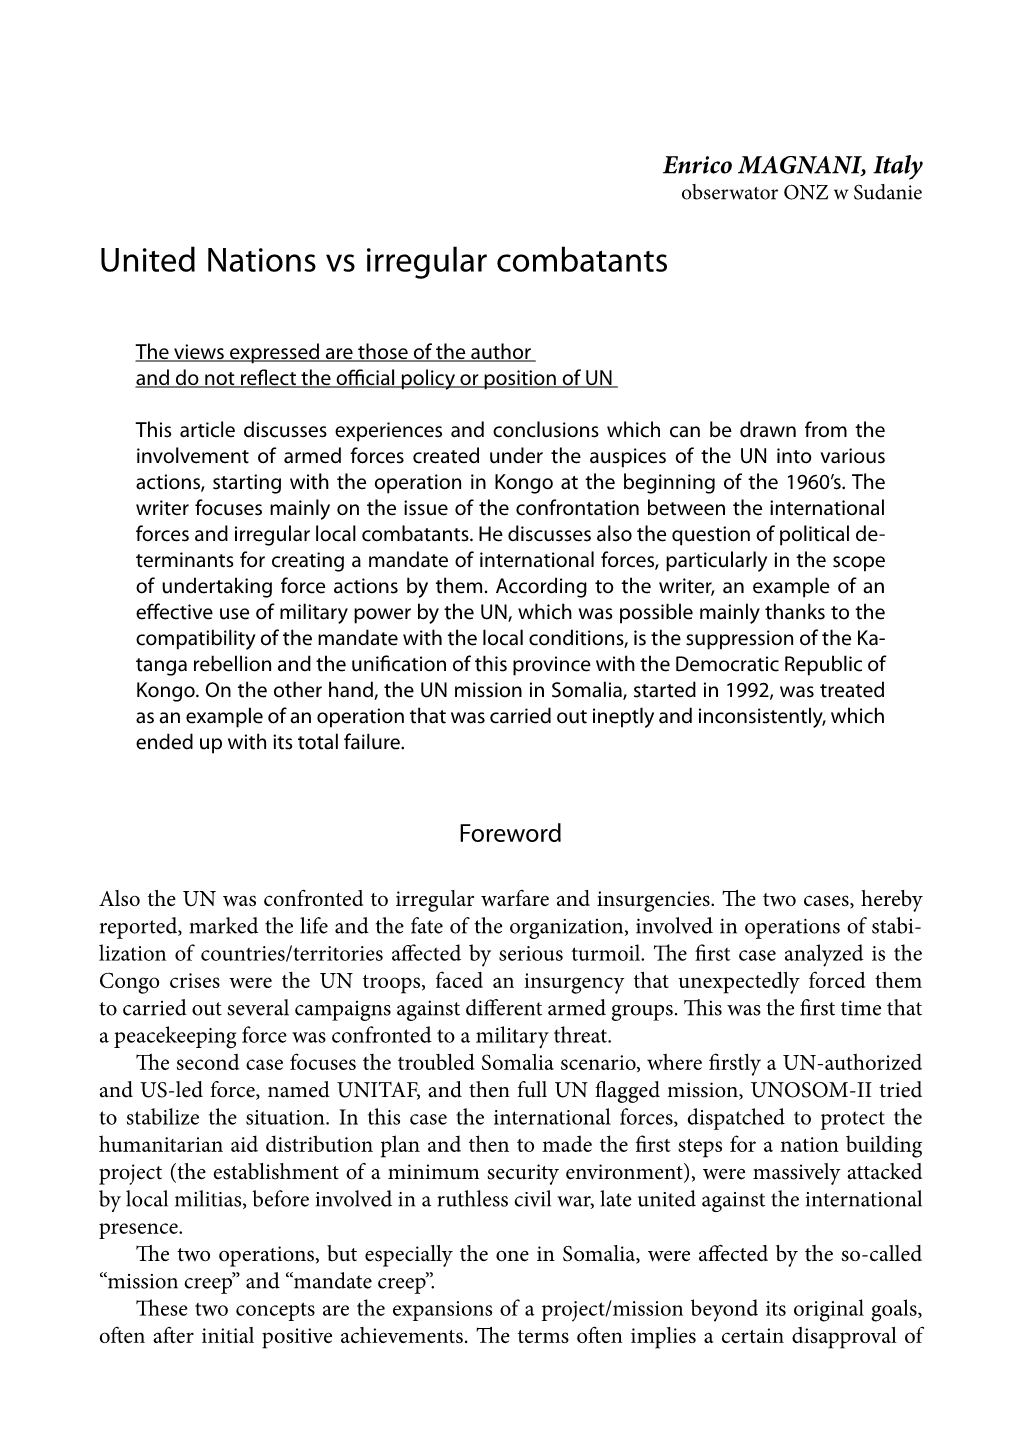 United Nations Vs Irregular Combatants